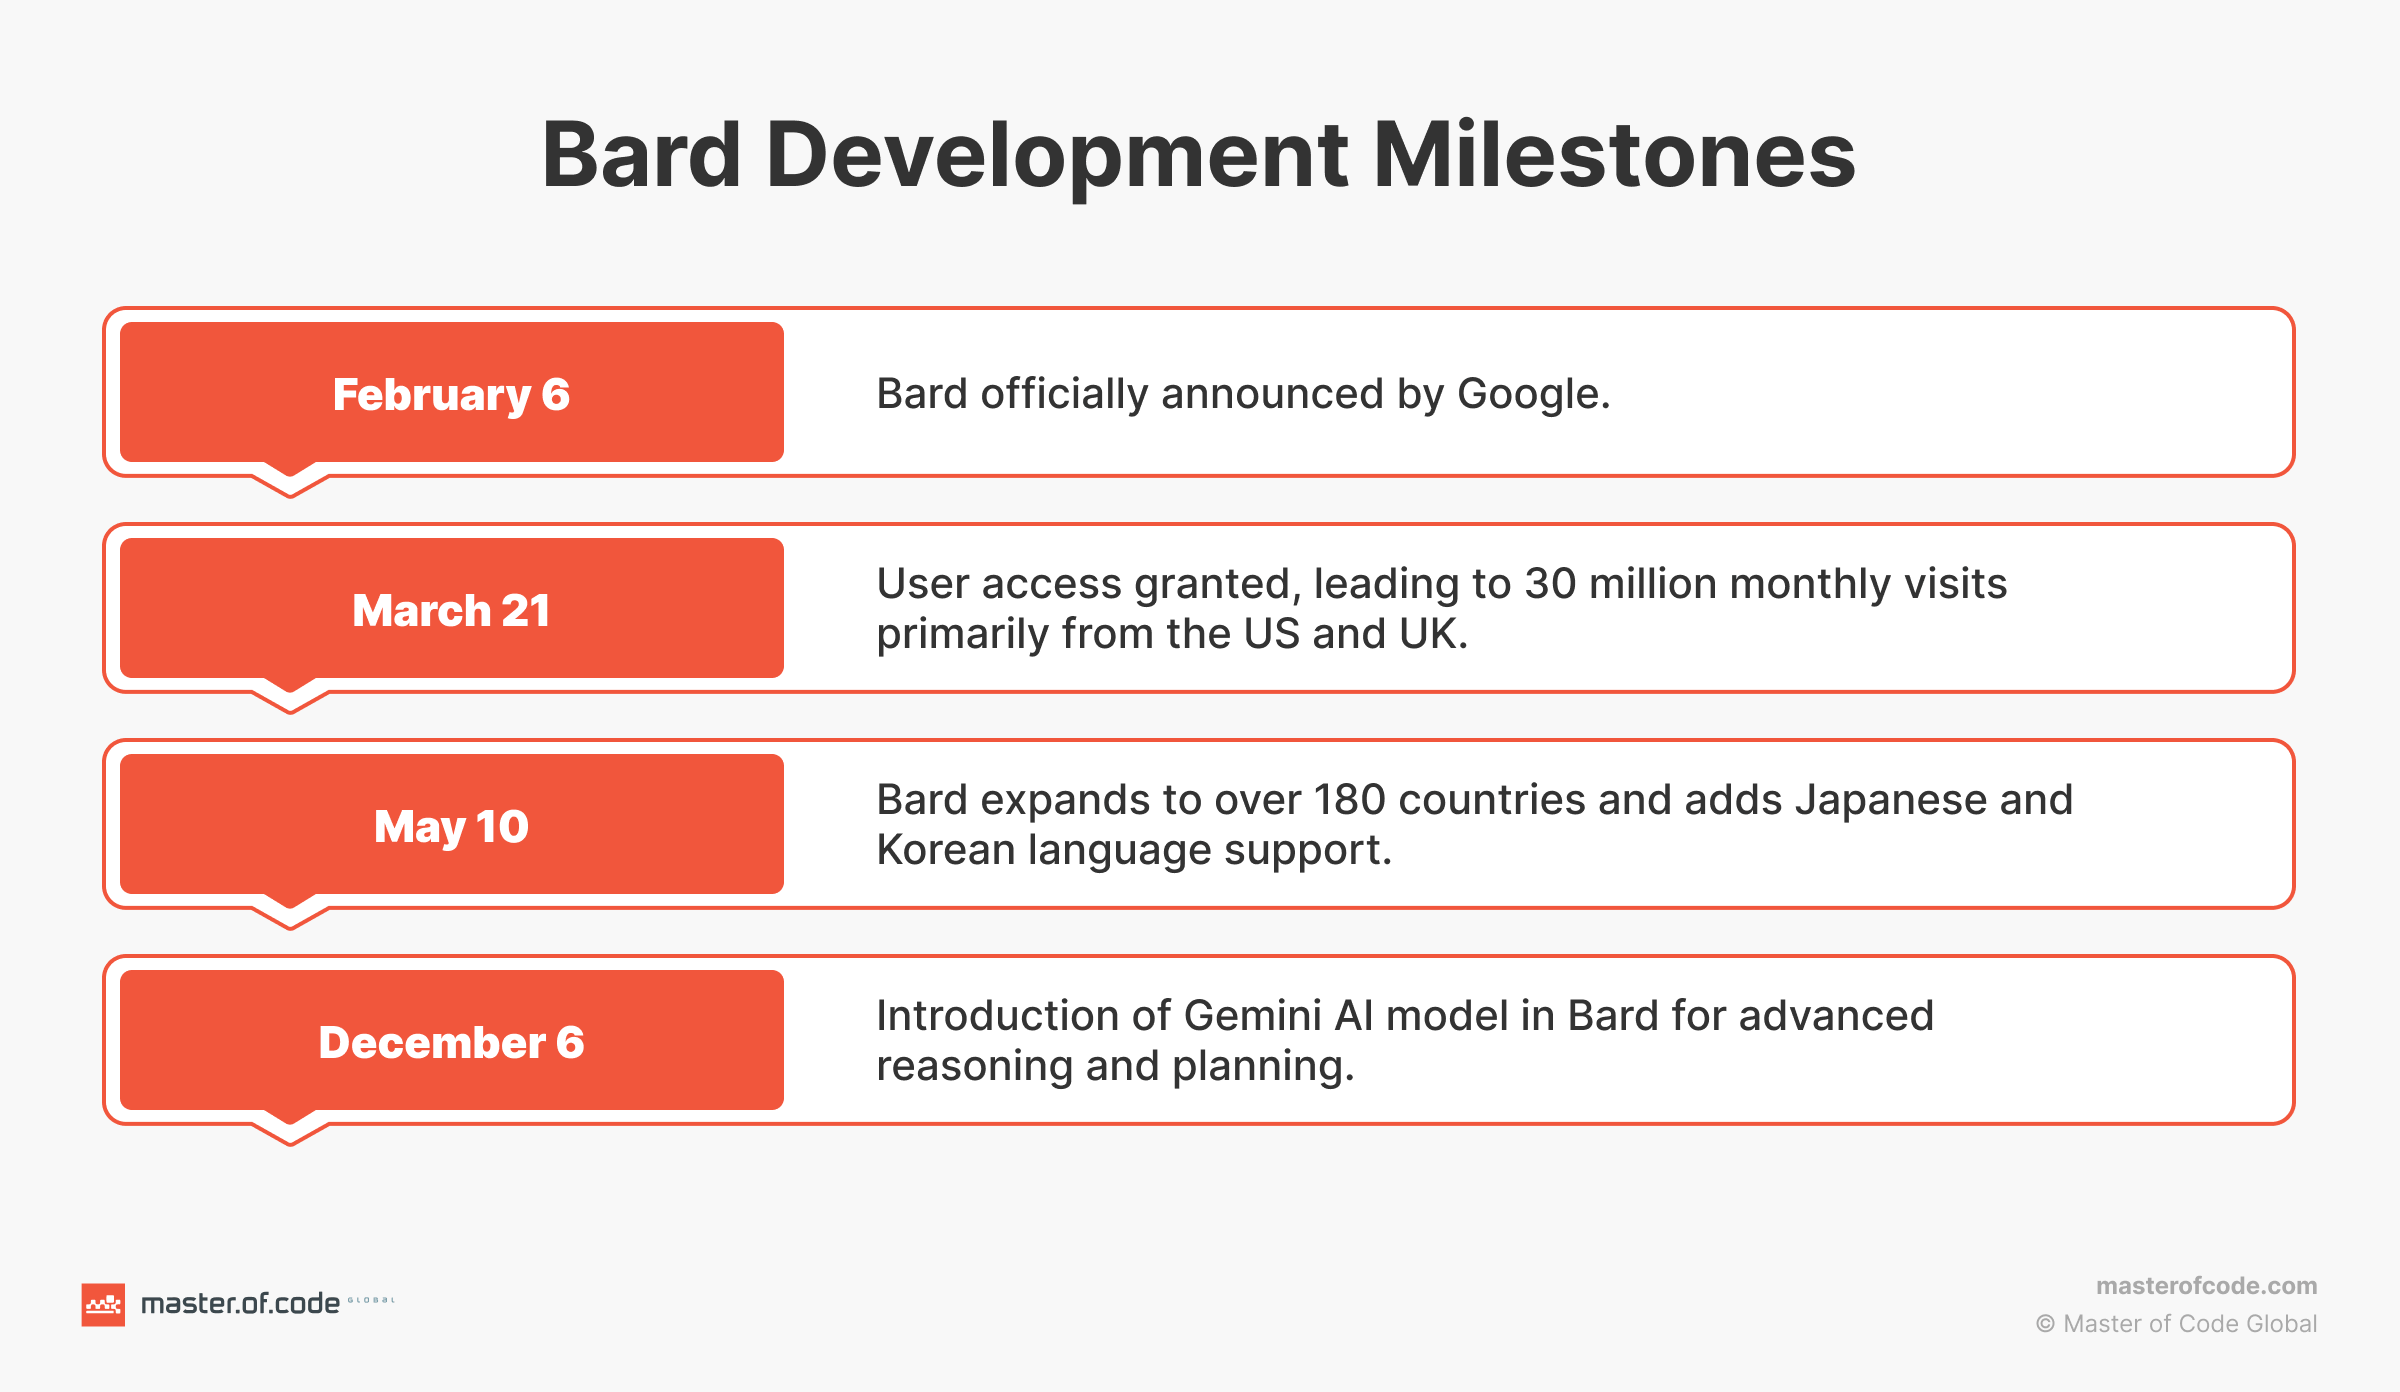 Bard Development